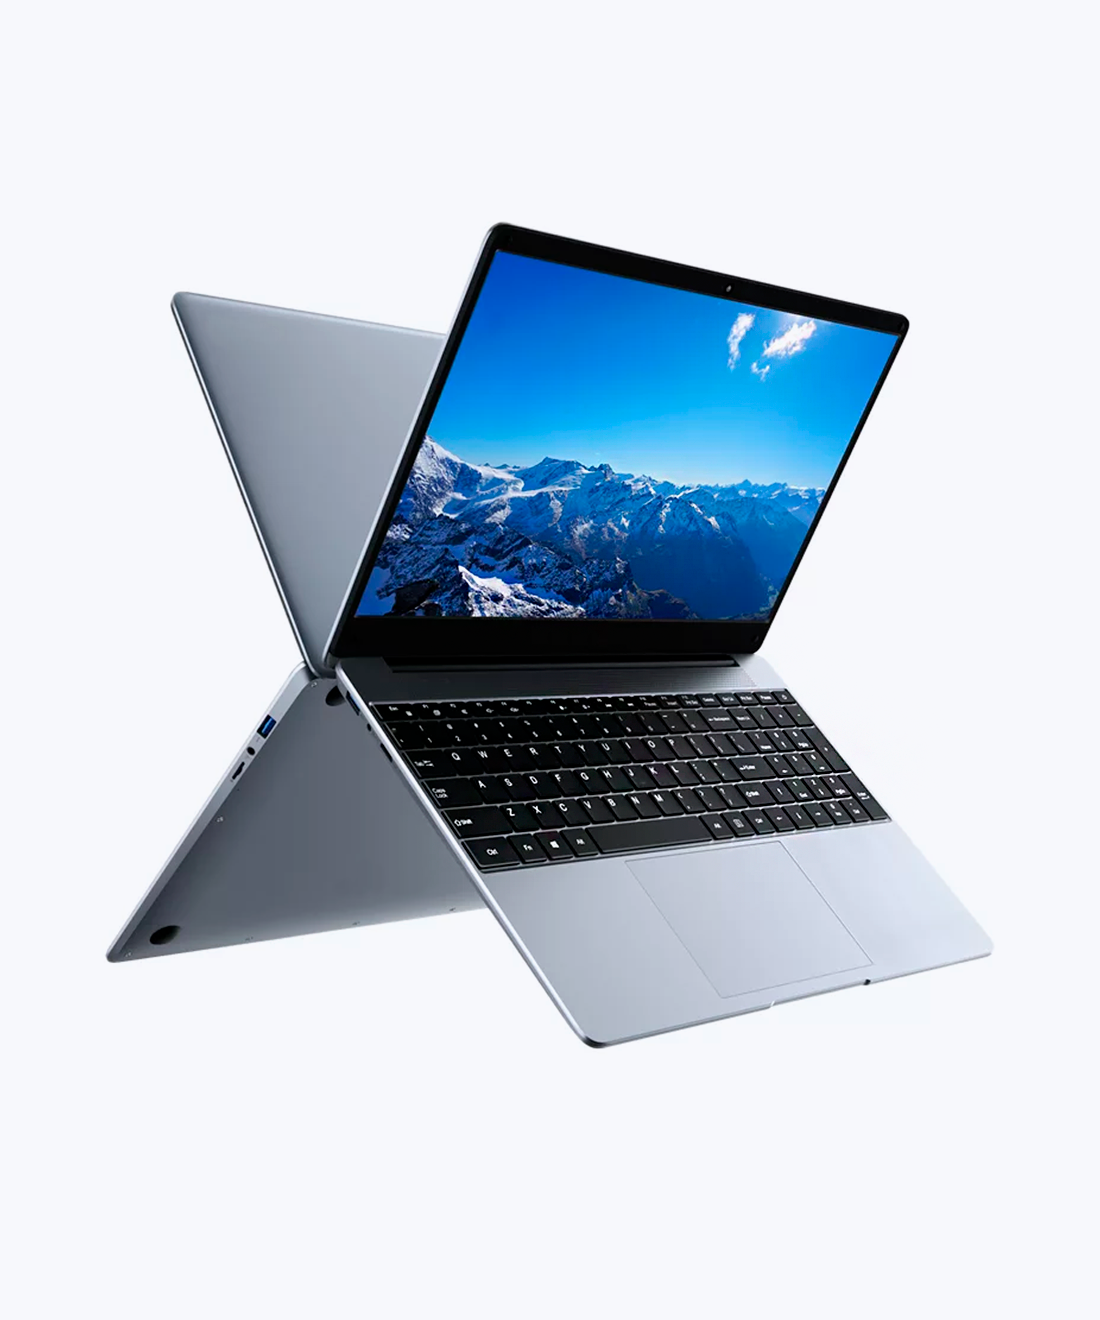 Ultraportable laptop